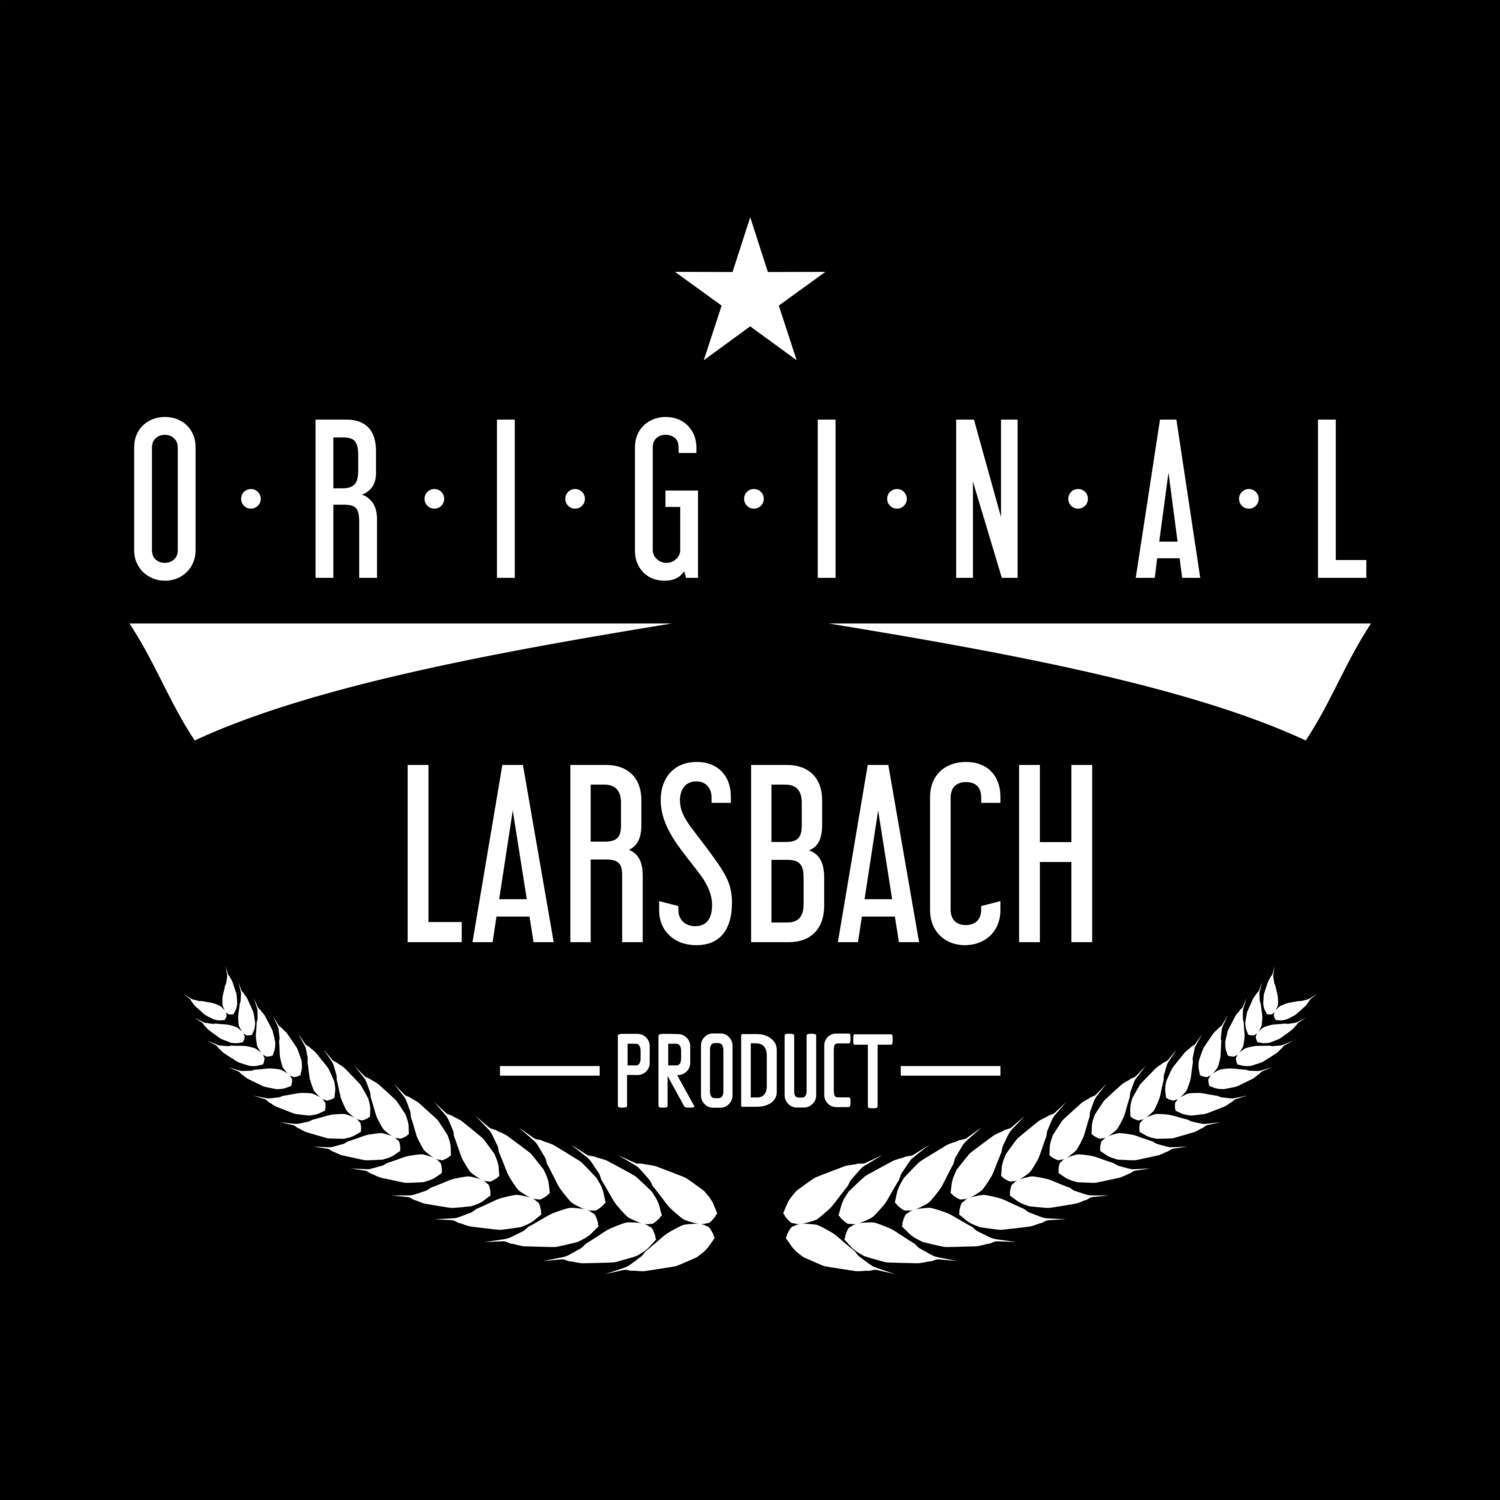 Larsbach T-Shirt »Original Product«